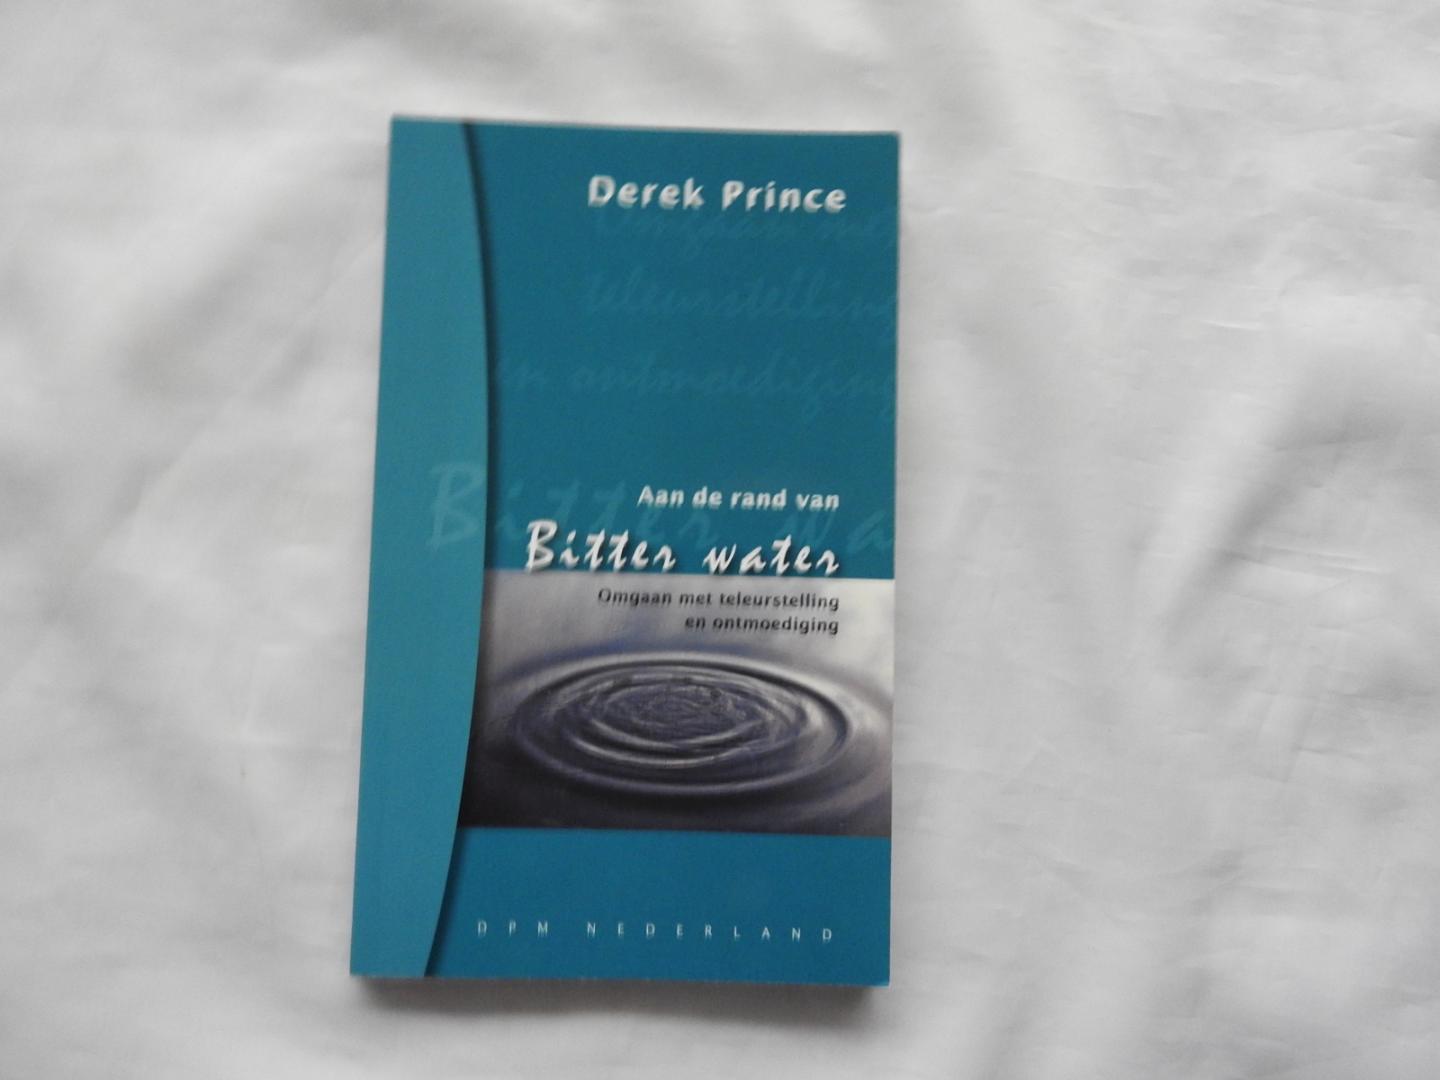 Prince Derek - Aan de rand van bitter water : omgaan met teleurstelling en ontmoediging